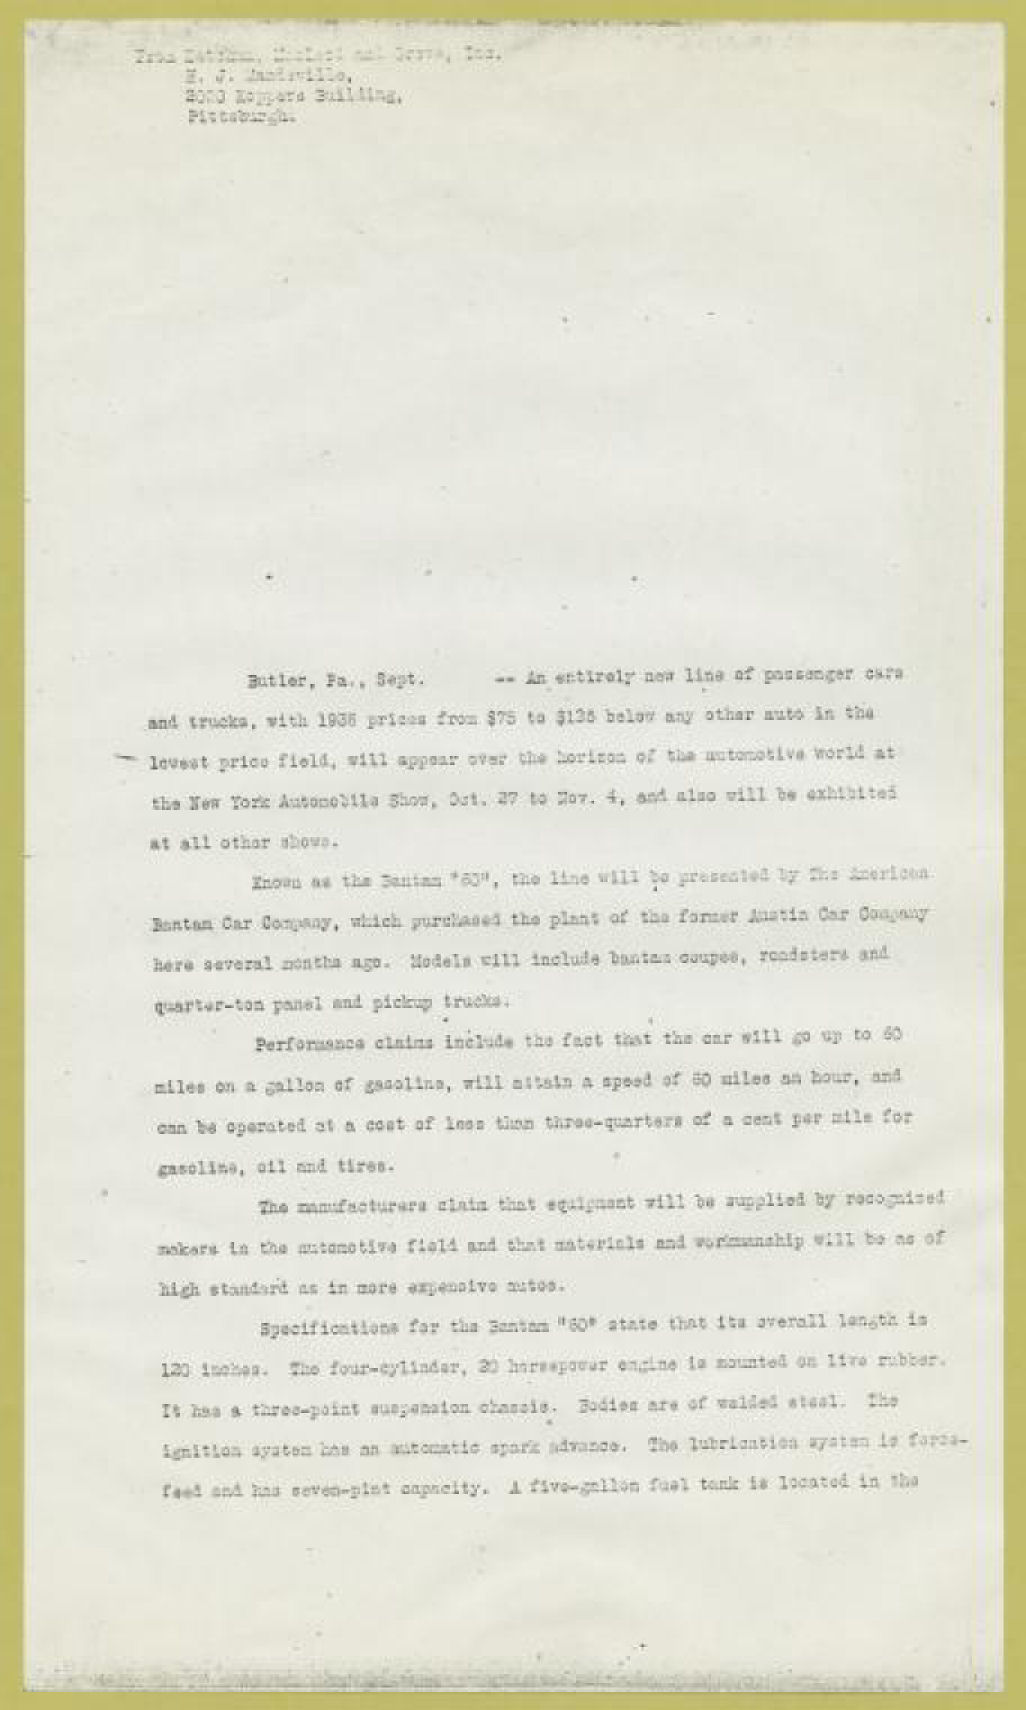 1937_American_Bantam_Press_Release-02